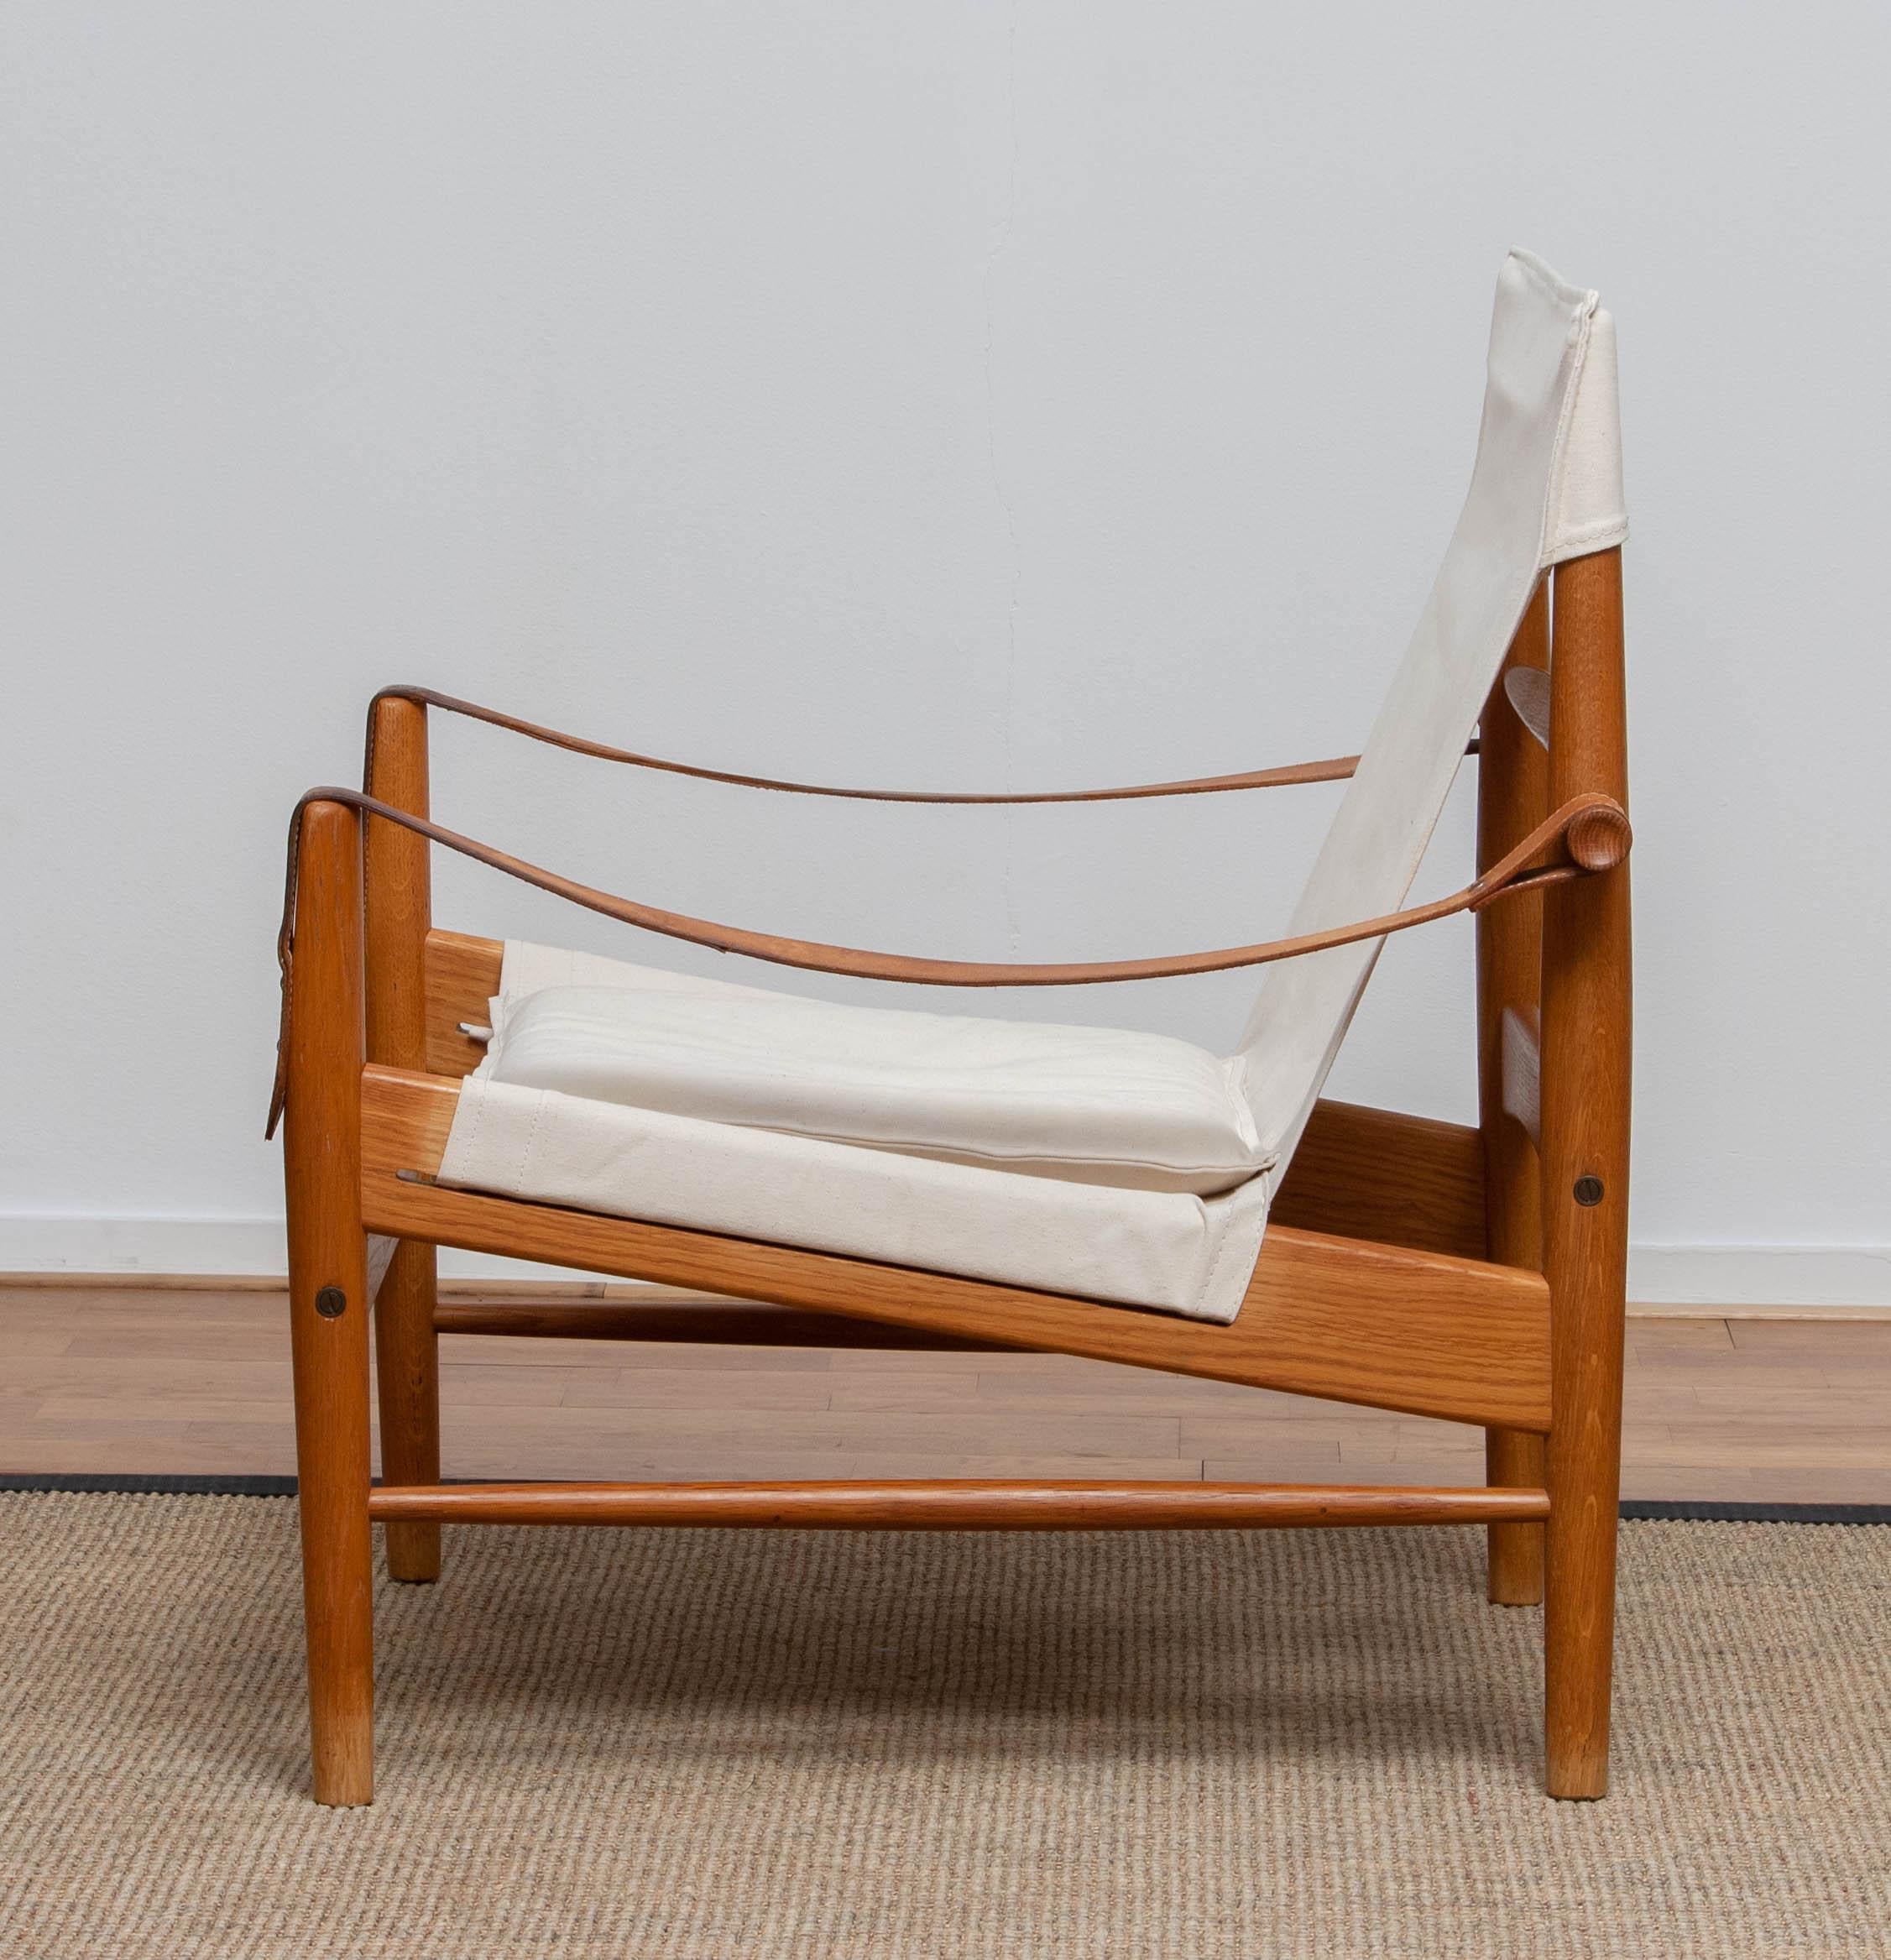 Canvas 1960s, Safari Lounge Chair by Hans Olsen for Viska Möbler in Kinna, Sweden 1960s